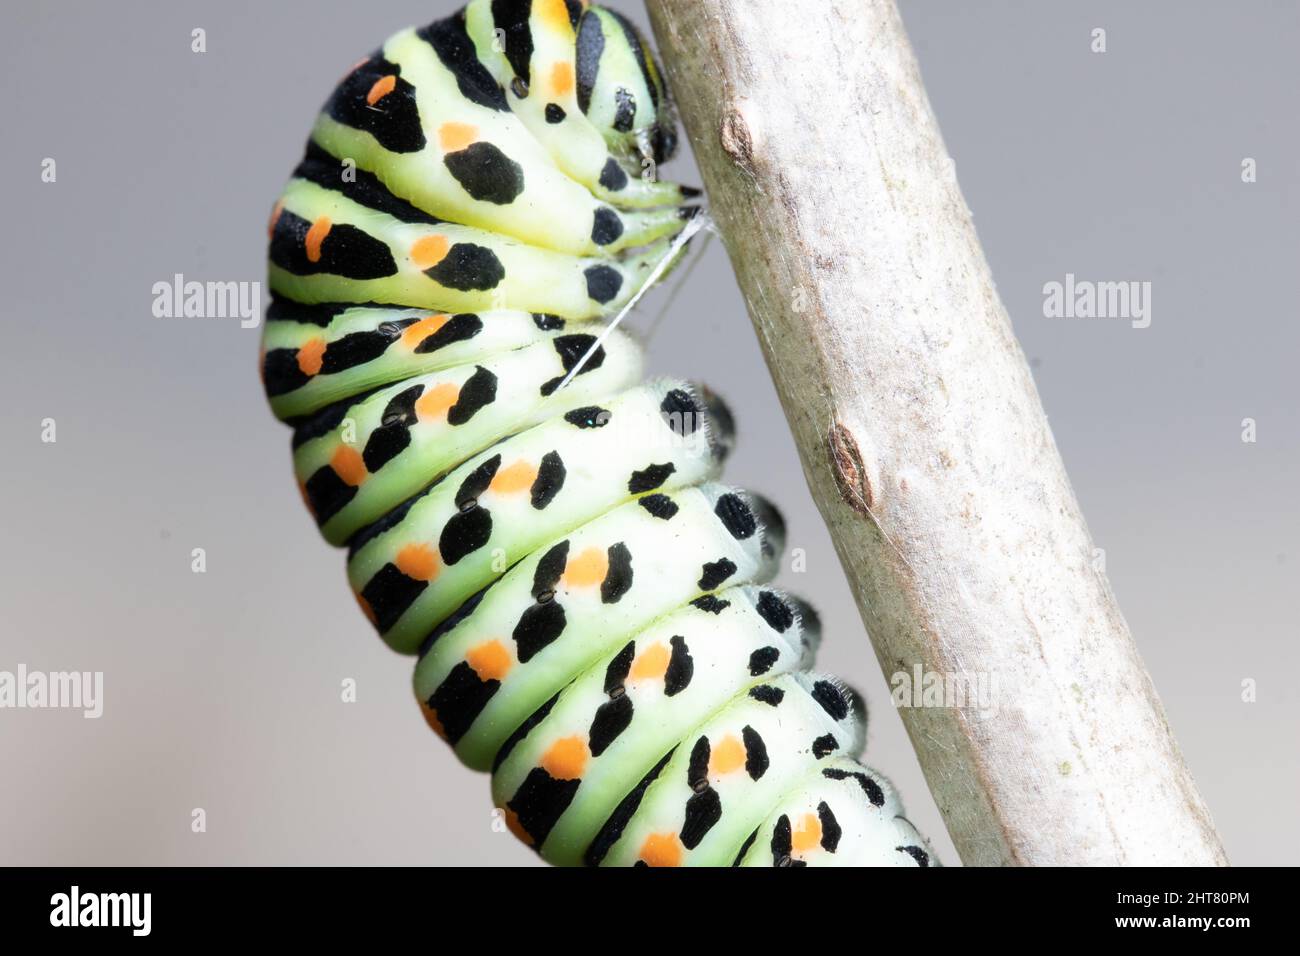 papilio machaon caterpillar in close up Stock Photo